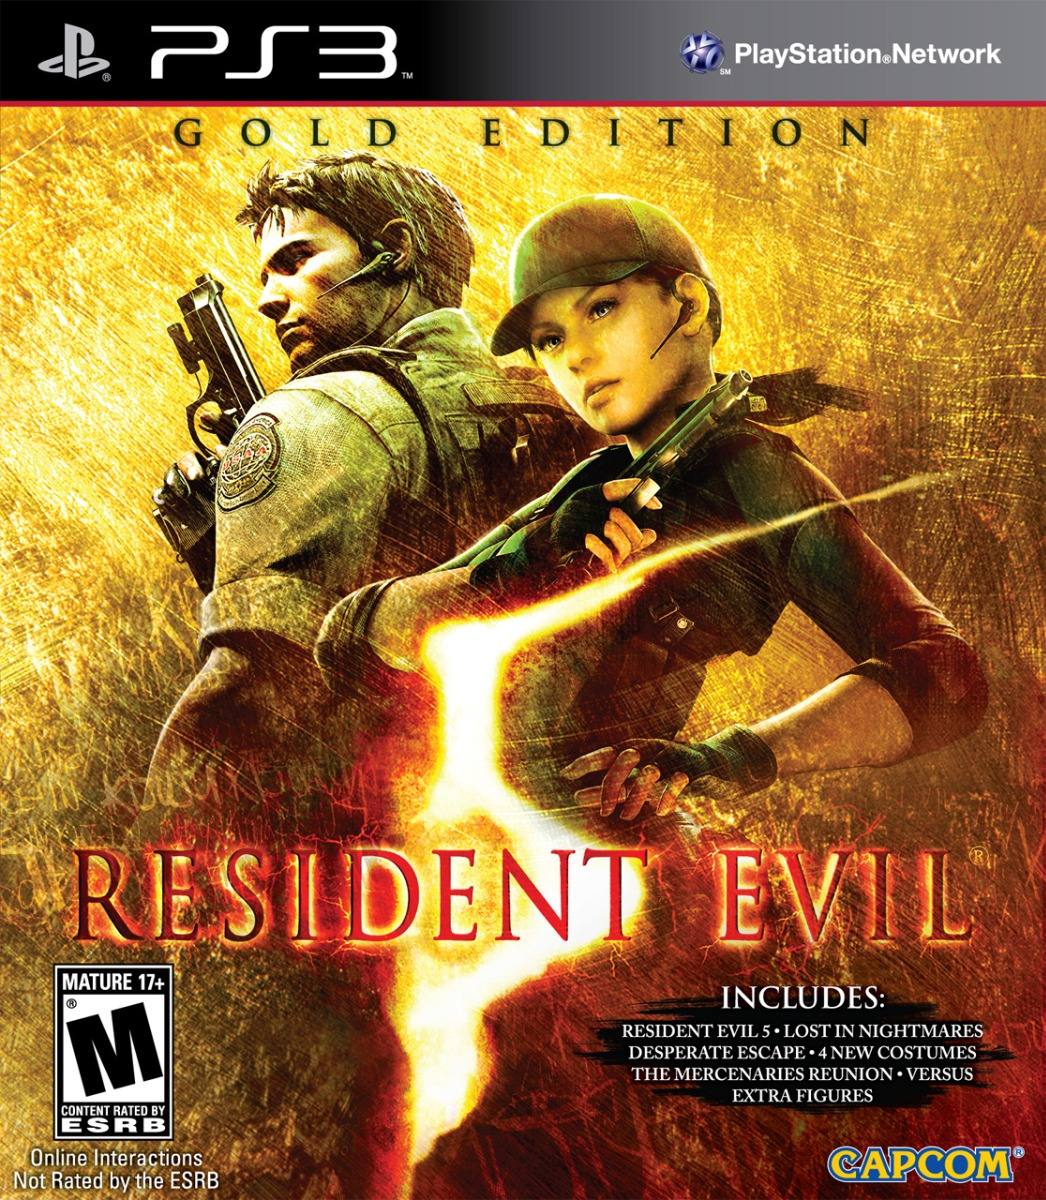 Resident evil 7 gold edition